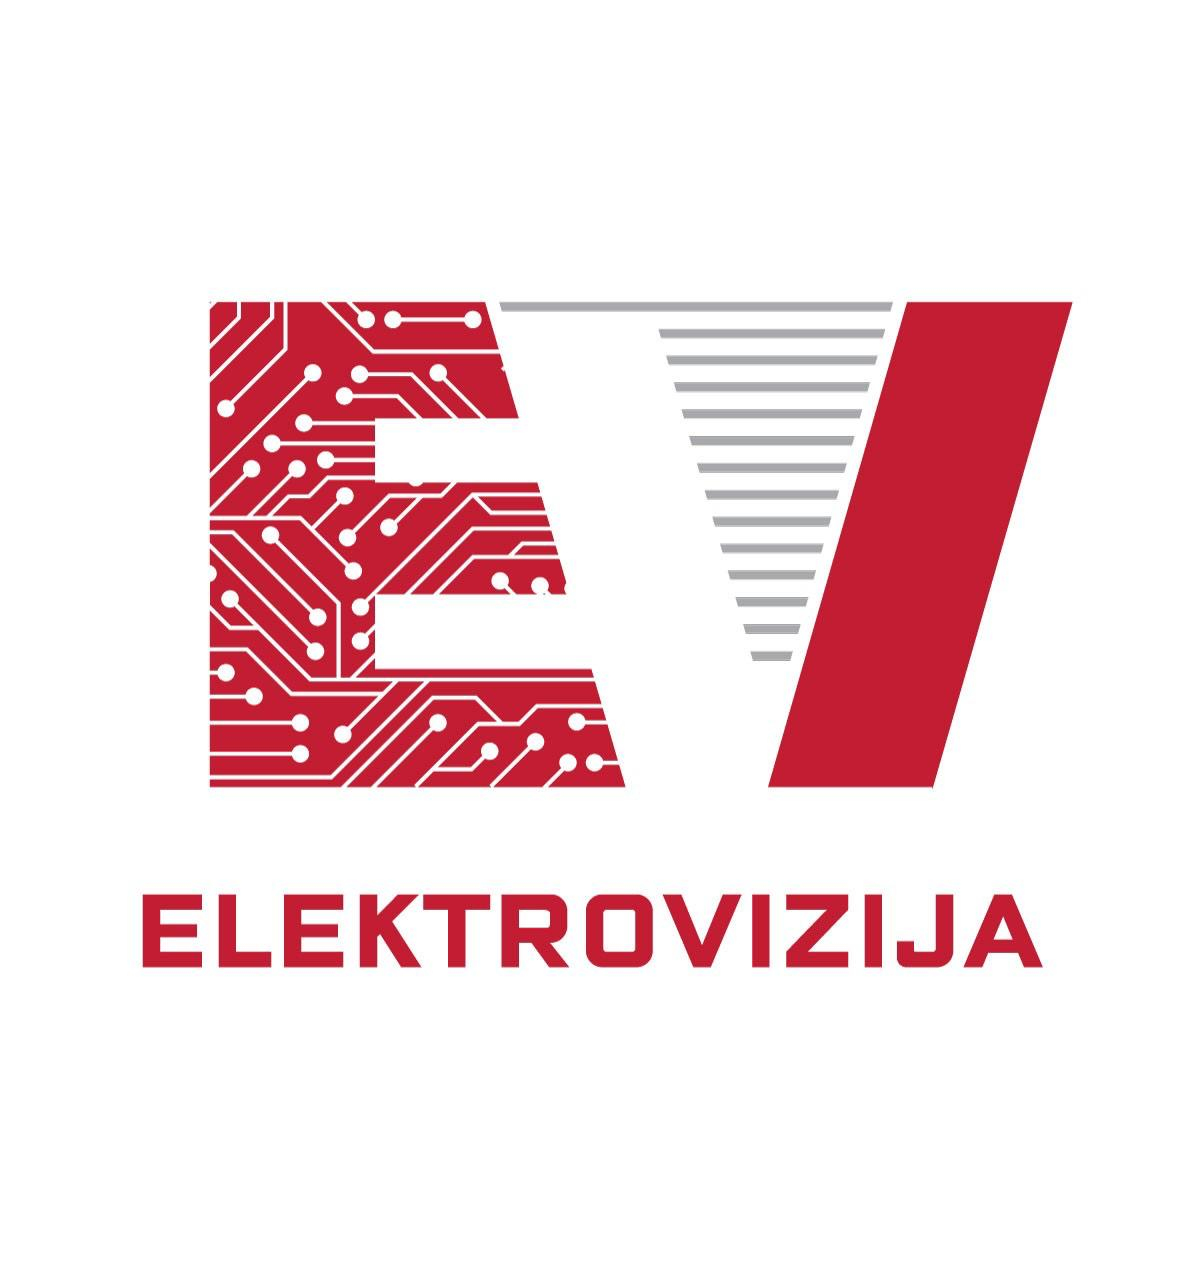 Elektrovizija iz Kragujevca, disitruibuter ELKO EP i iNELS opreme za Srbiju photo